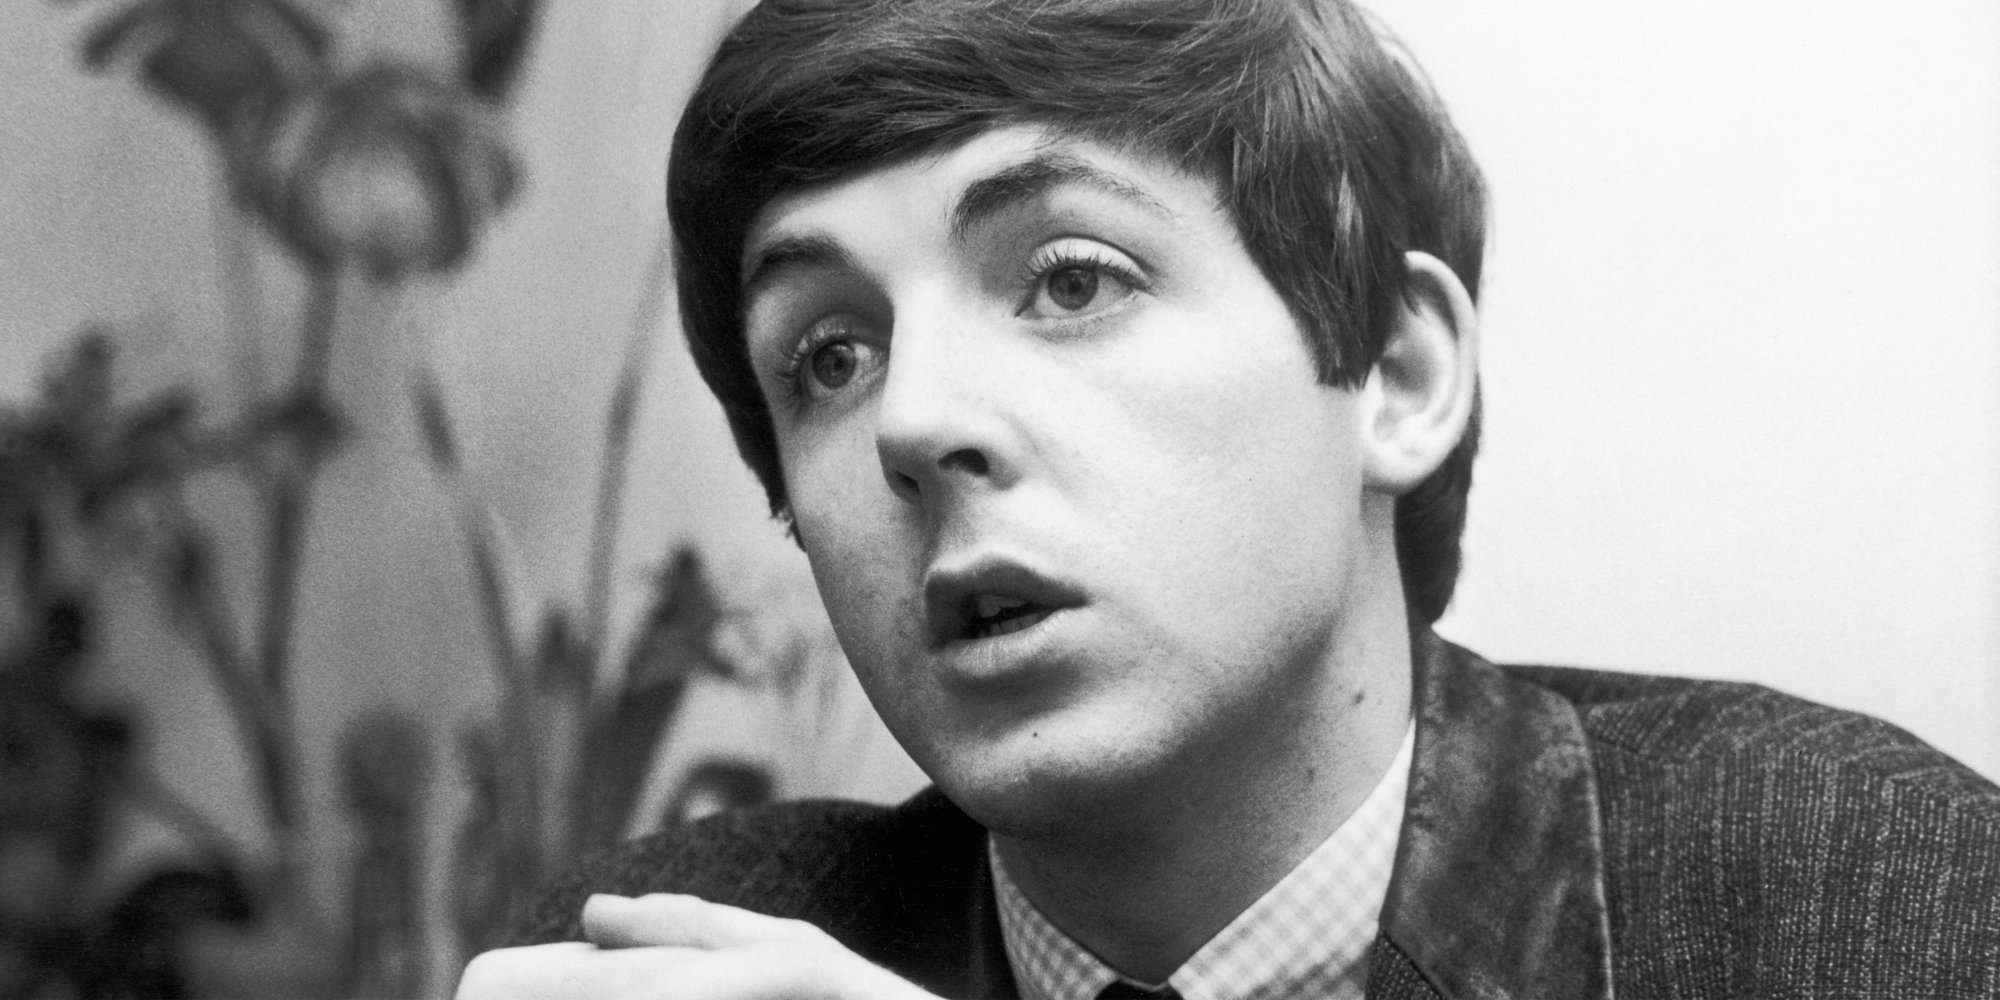 Paul McCartney in London in September, 1963.